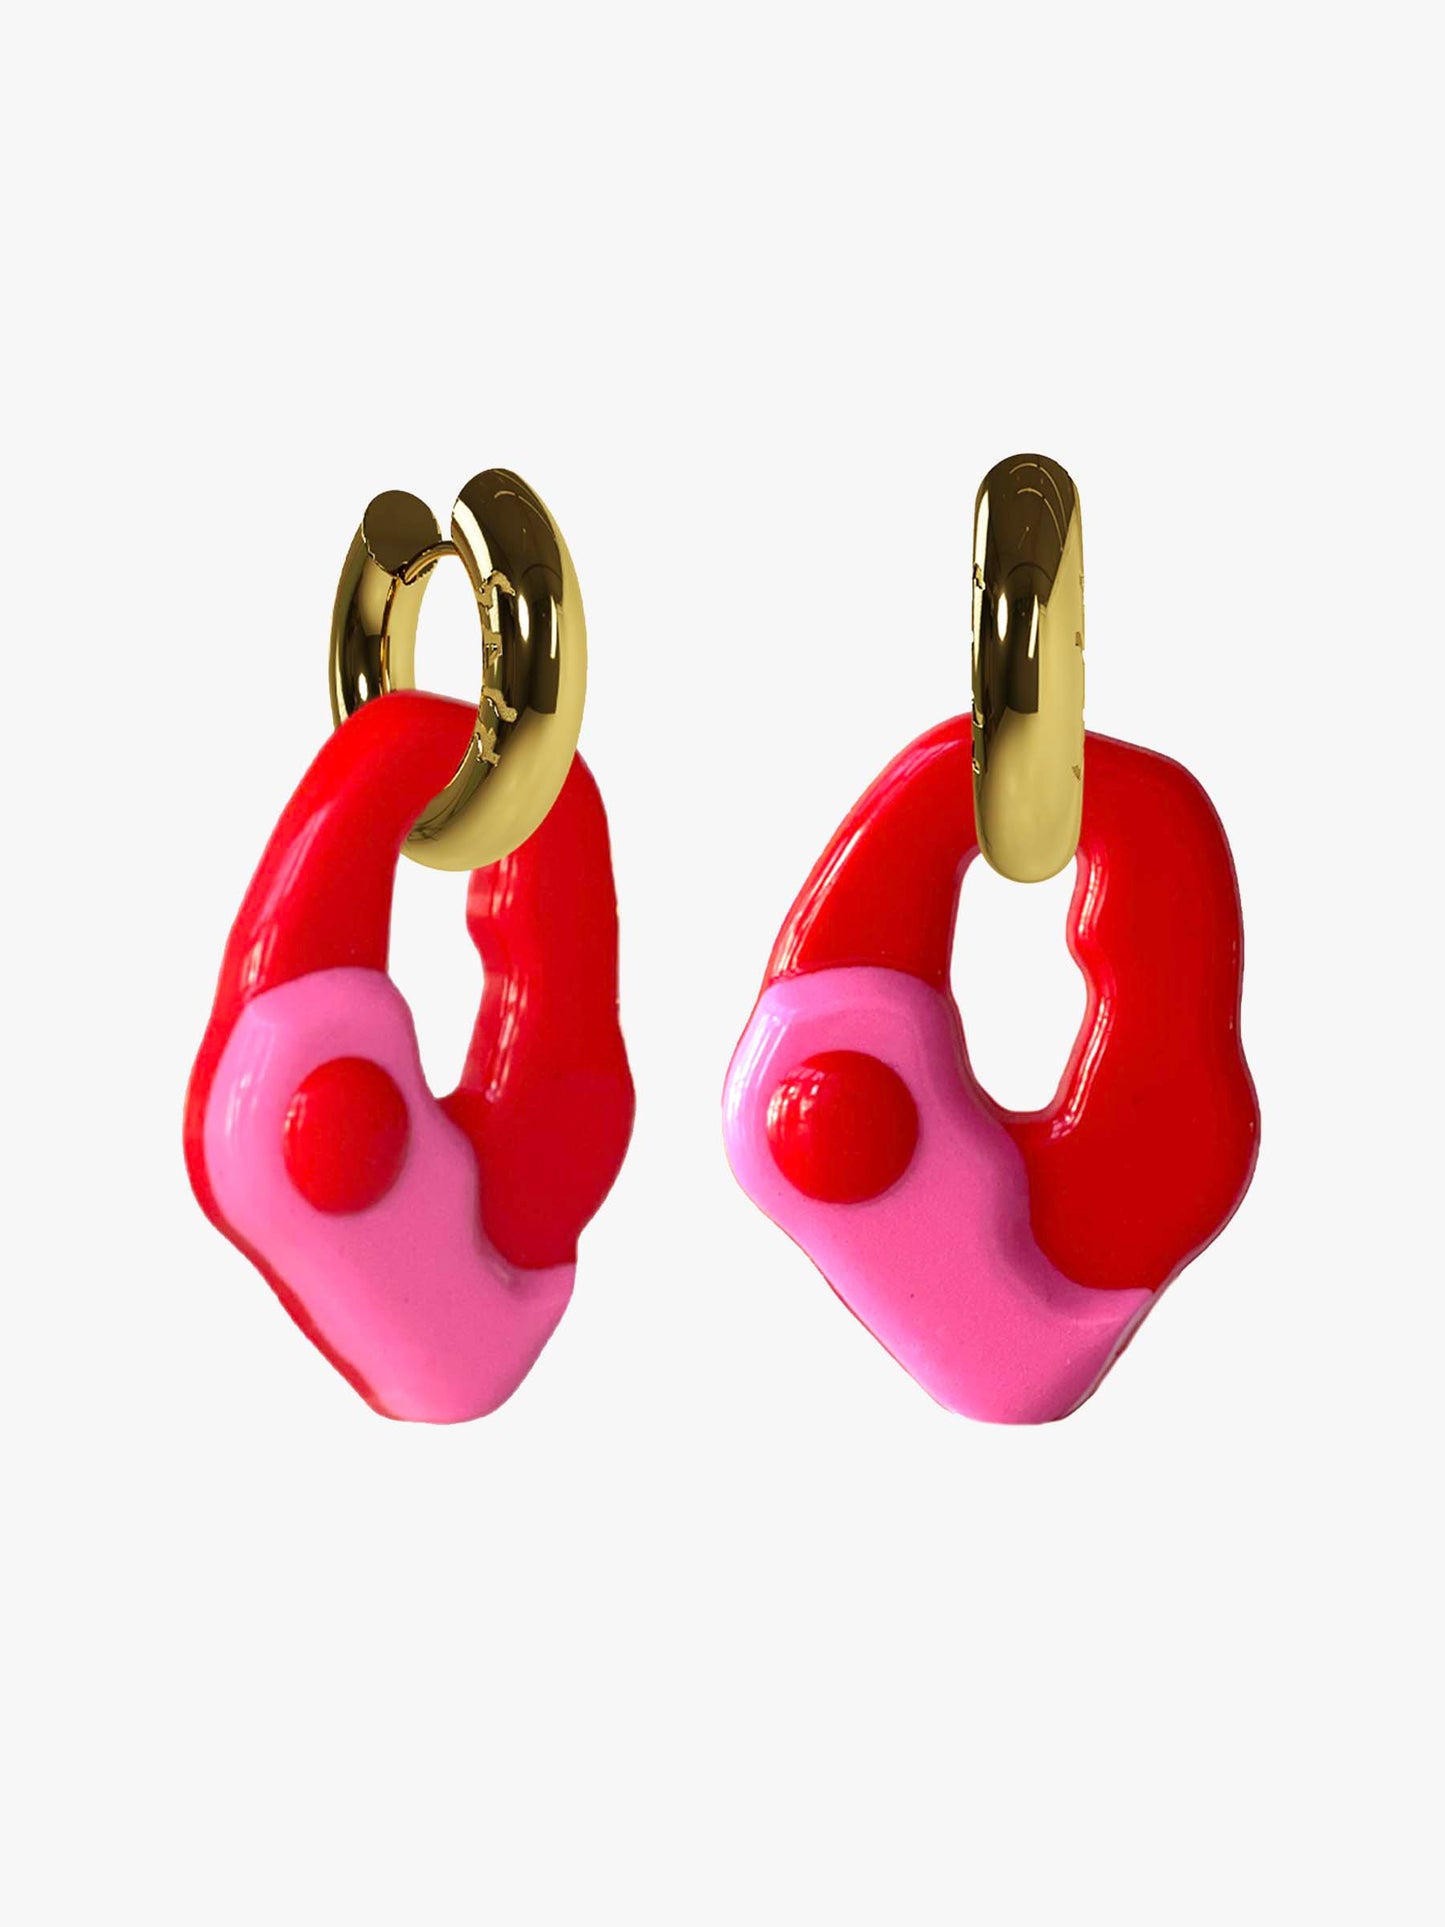 Yin Yang red pink gold earring (pair)